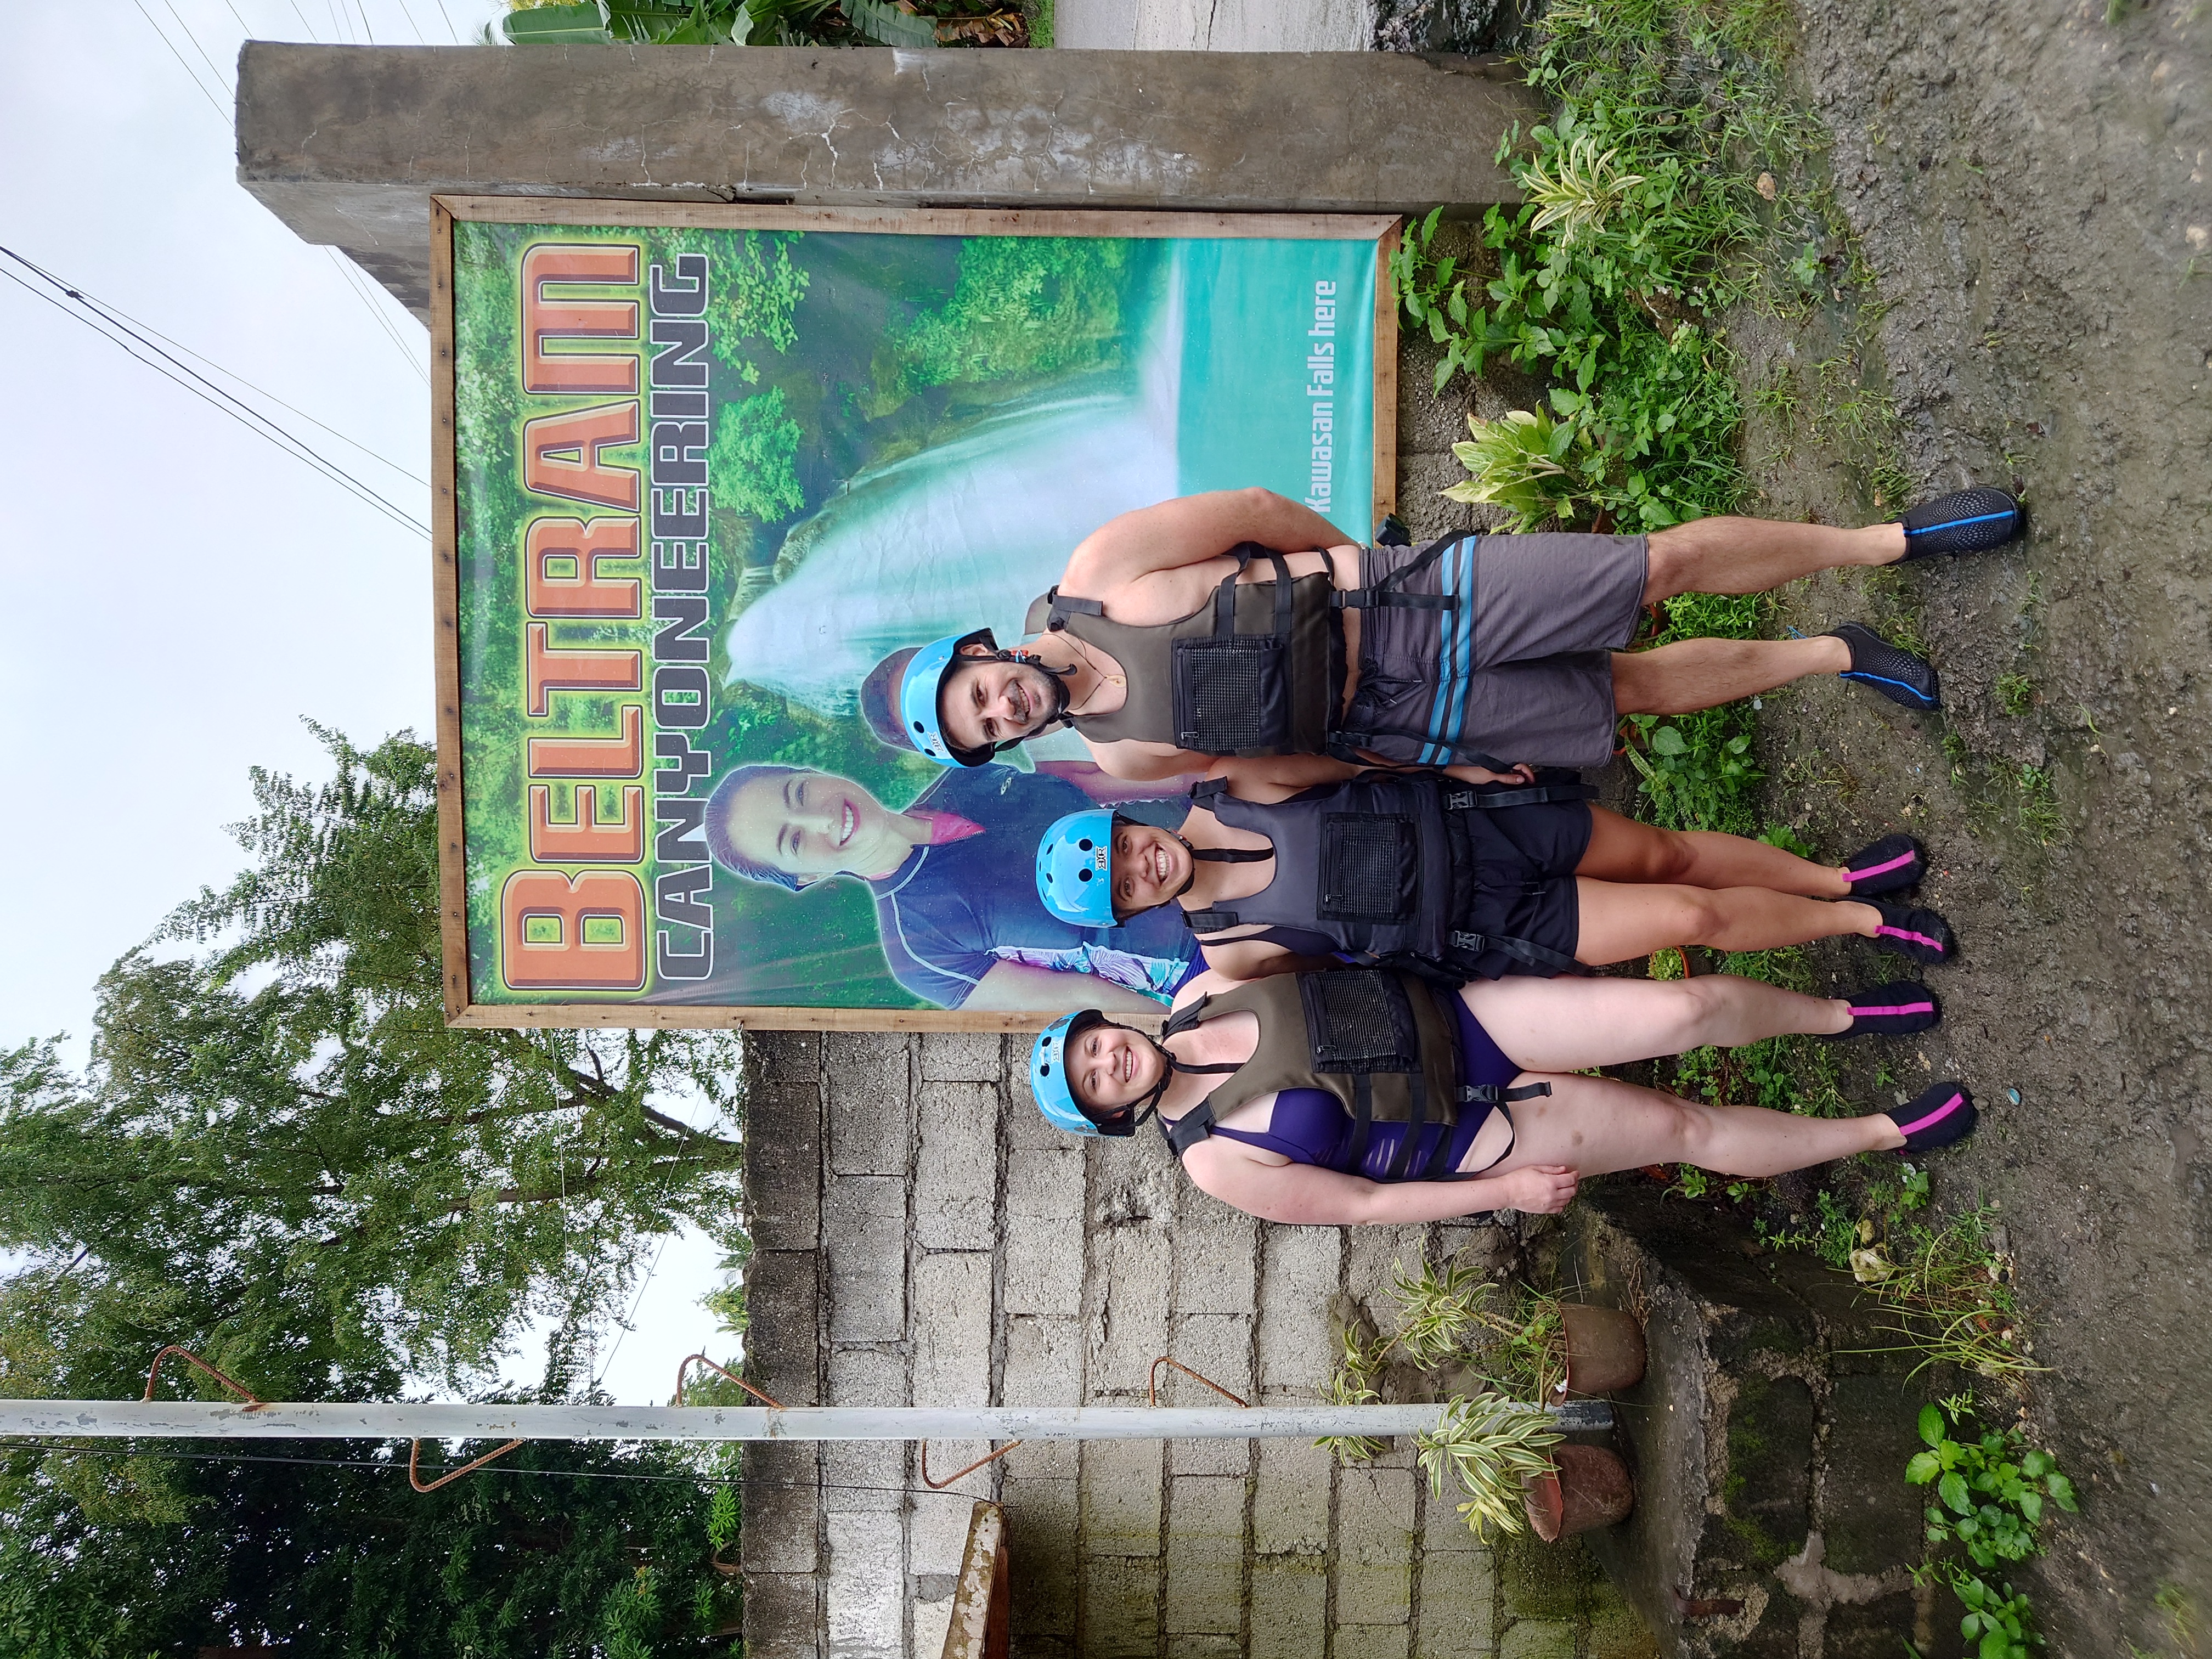 Rhys Sain, Taylor Shepherd and Lauren Higgins ahead of their Beltram Advenures tour of Kawasan Falls